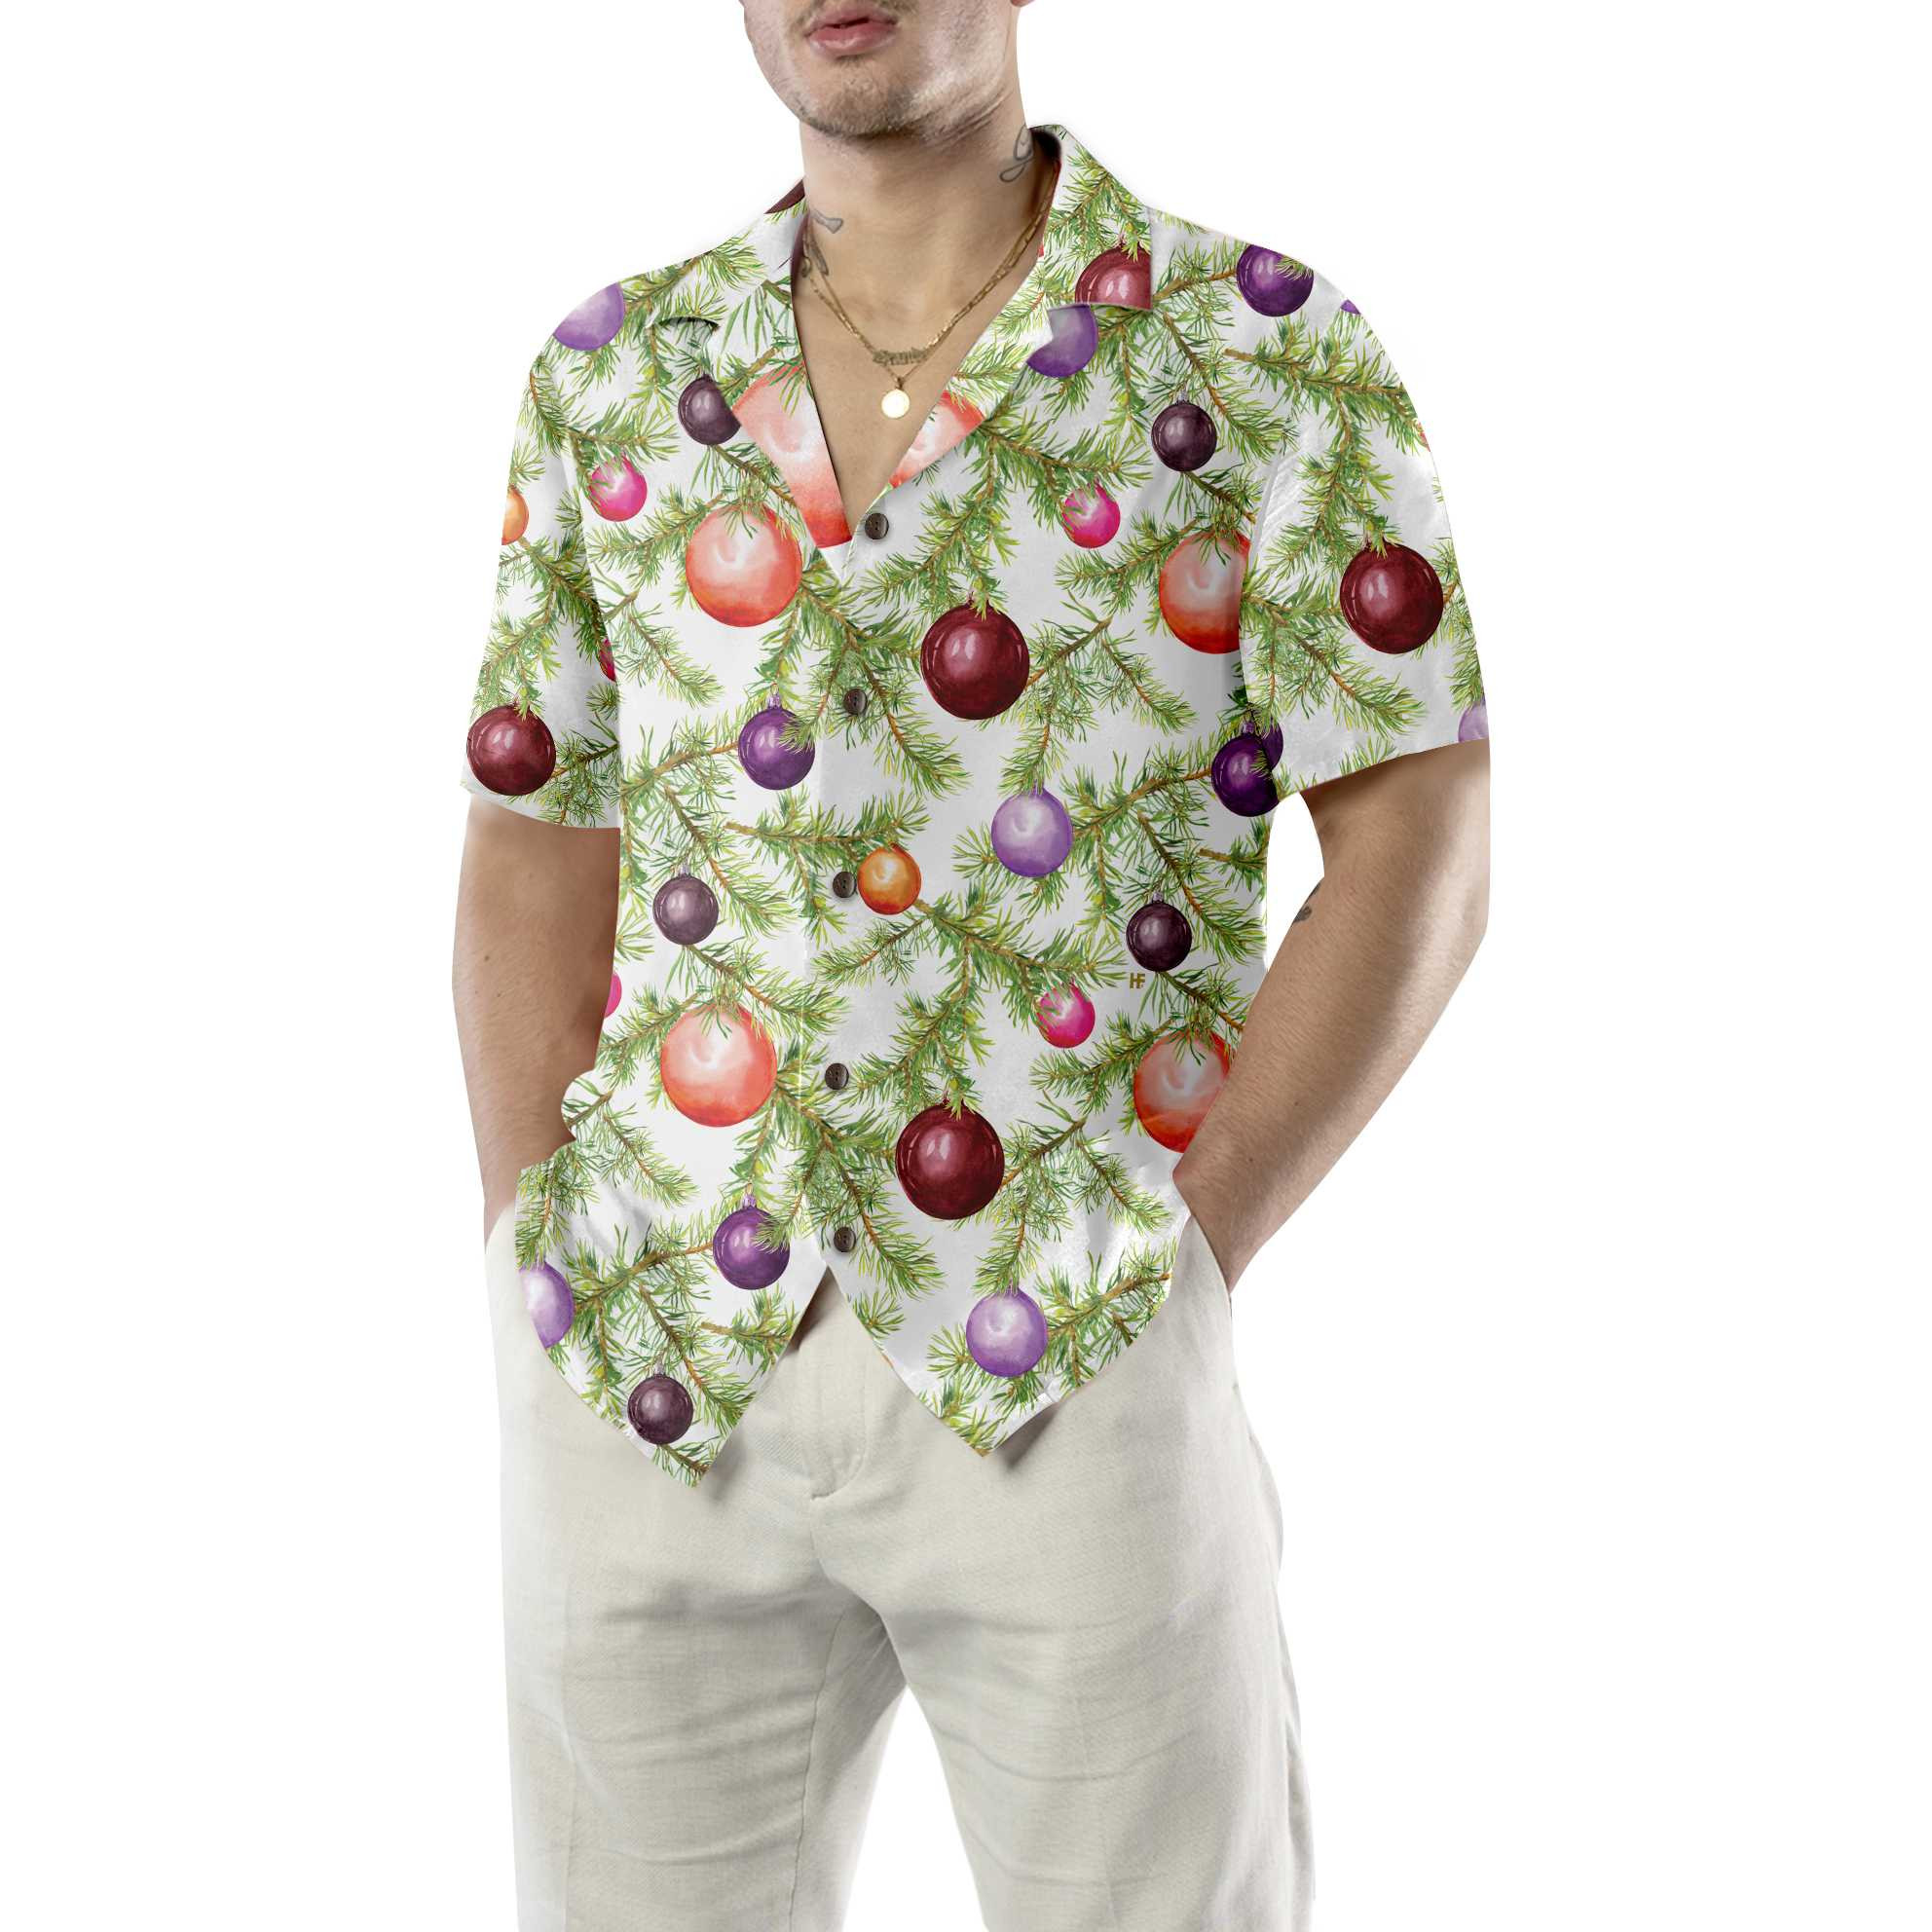 Christmas Baubles And Fir Tree Twigs Hawaiian Shirt, Funny Christmas Tree Shirt, Best Xmas Gift Idea